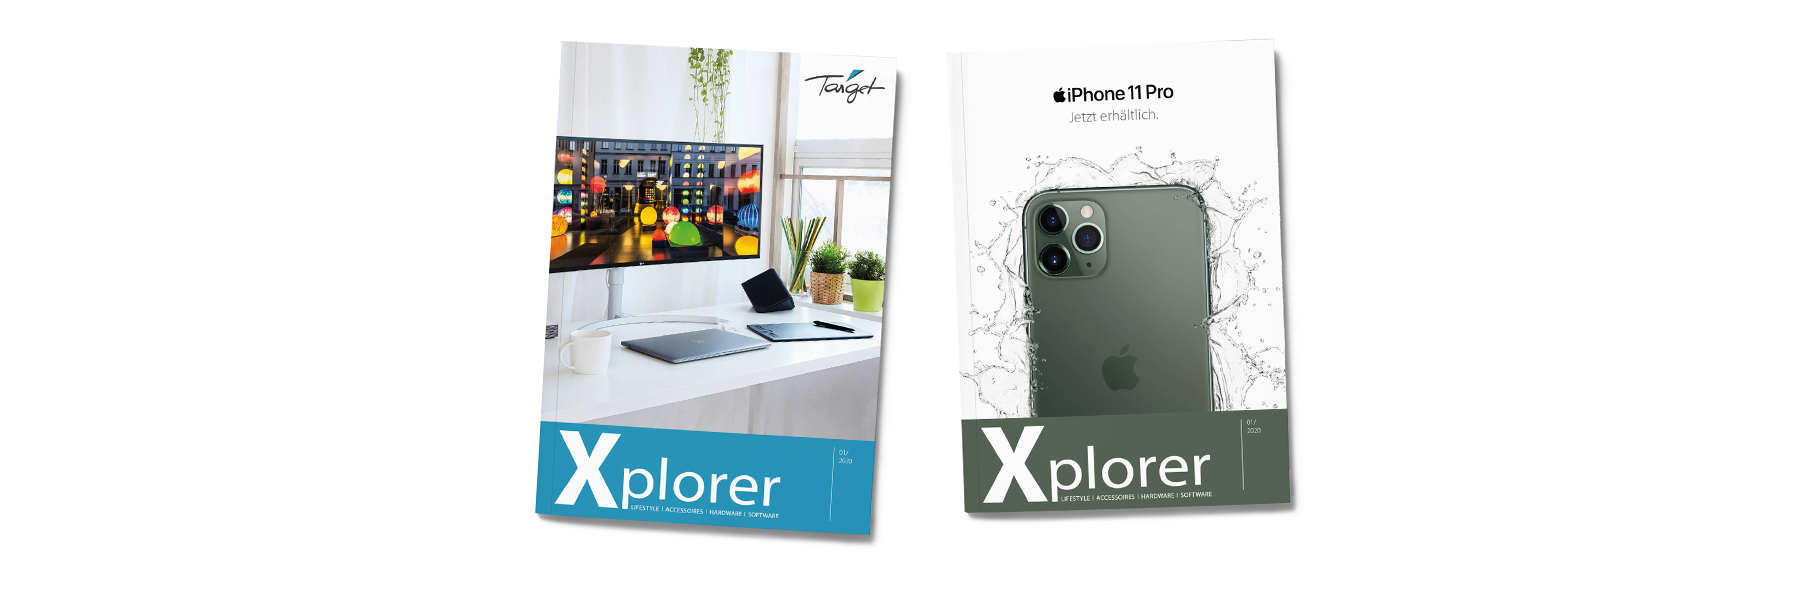 Xplorer Gadgets und Apple 2020, Mockup